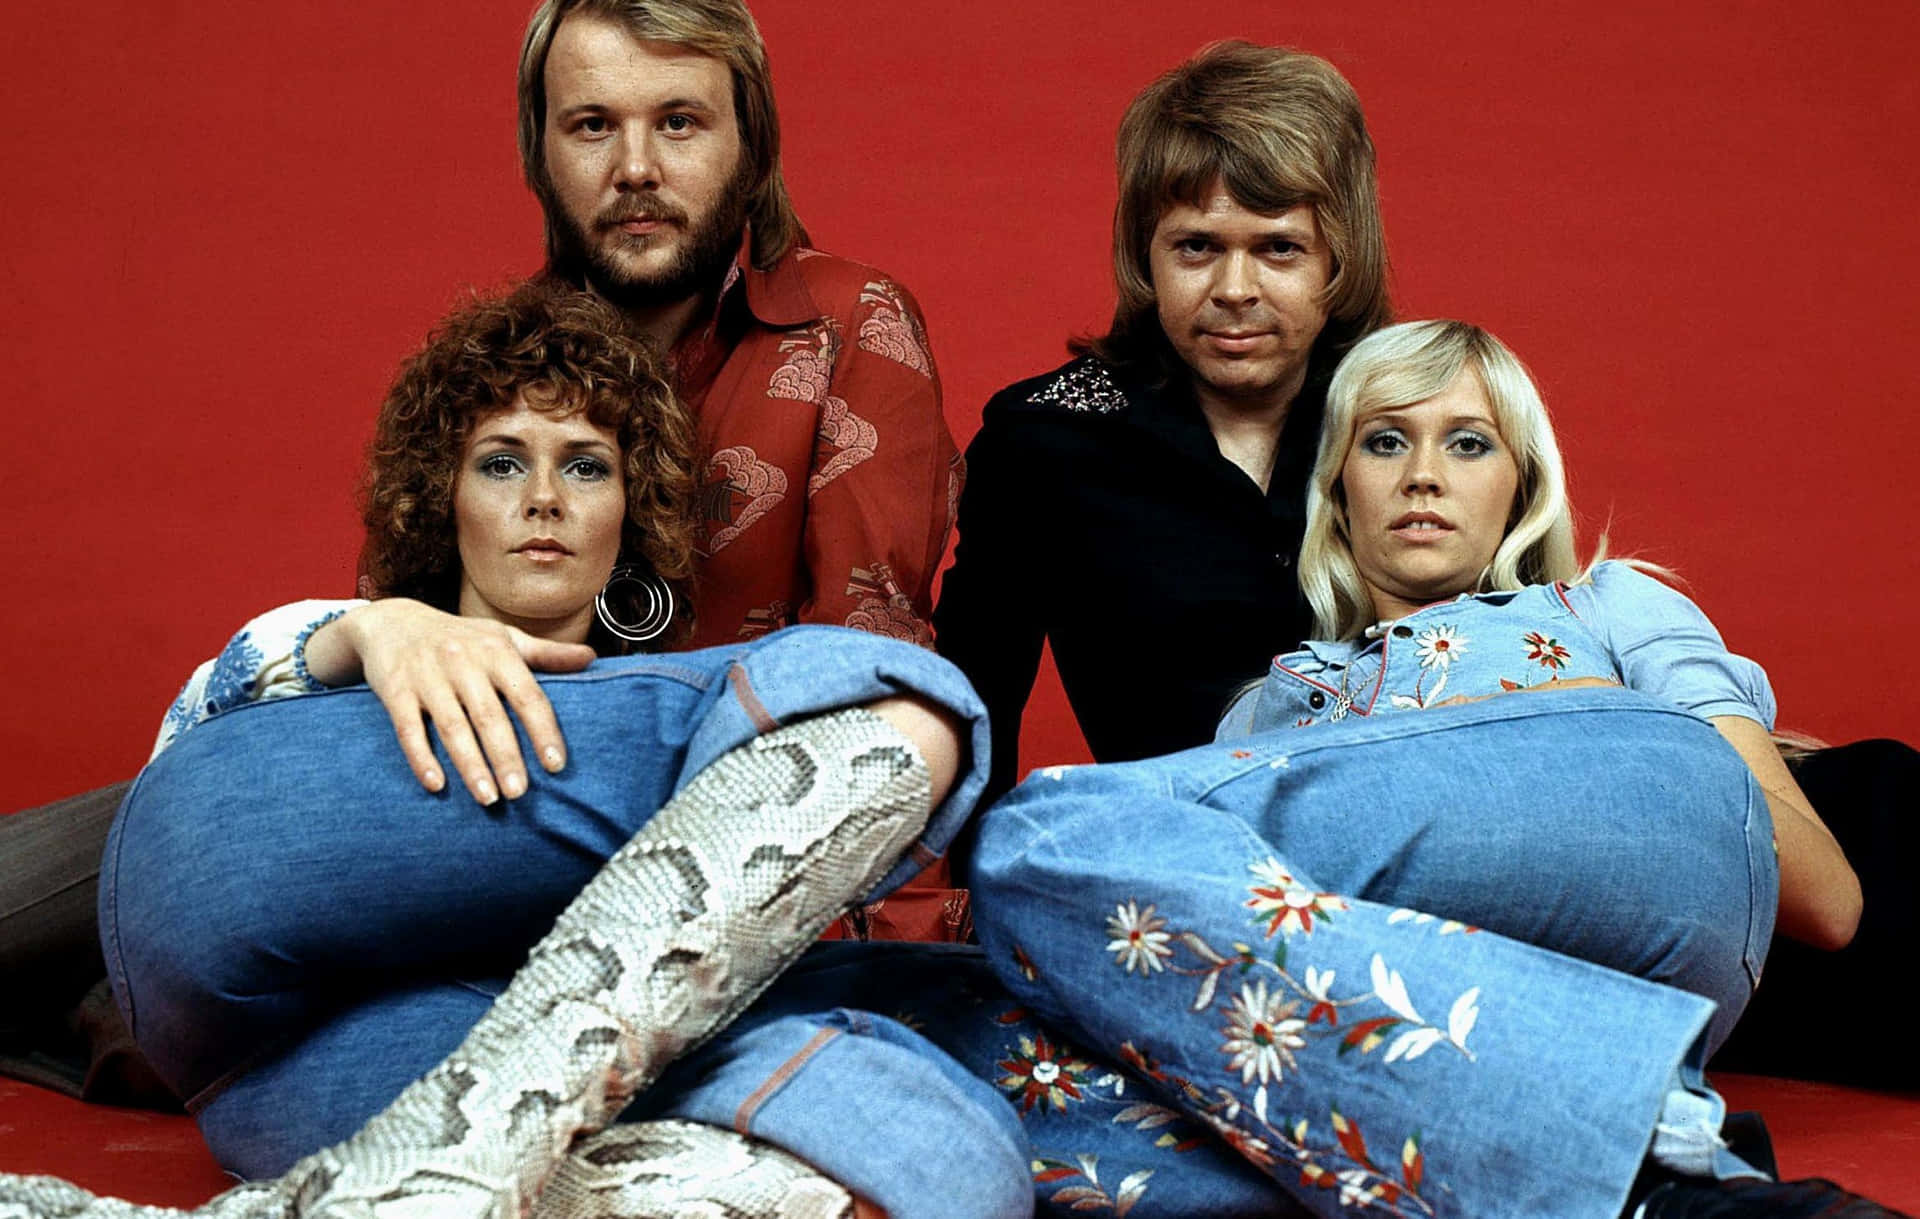 Image of Legendary Swedish Pop Group "Abba"